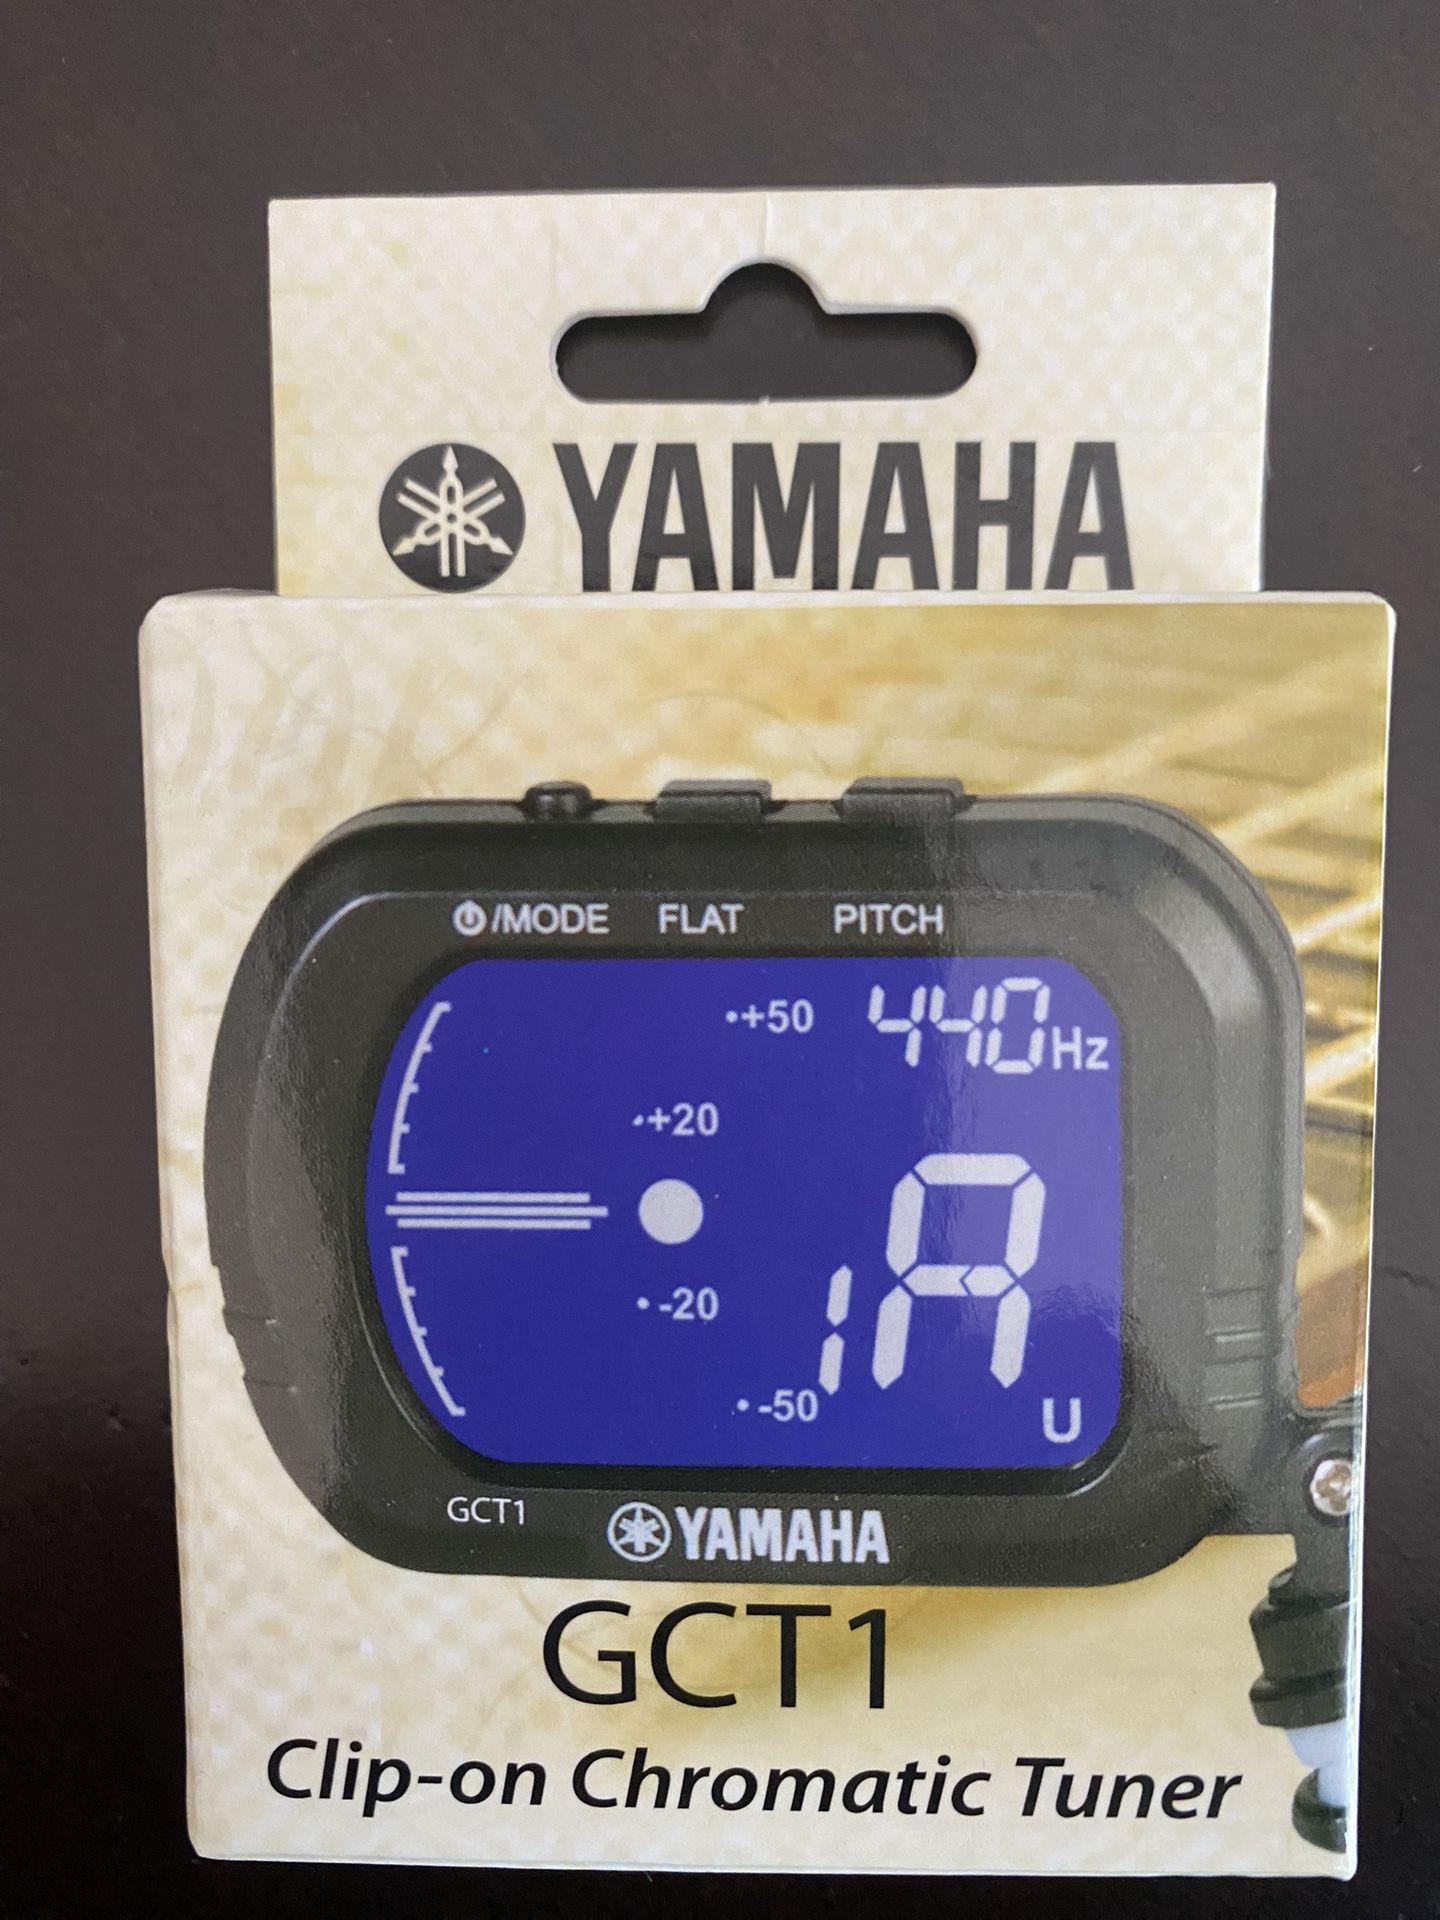 Yamaha Clip-on Chromatic Tuner